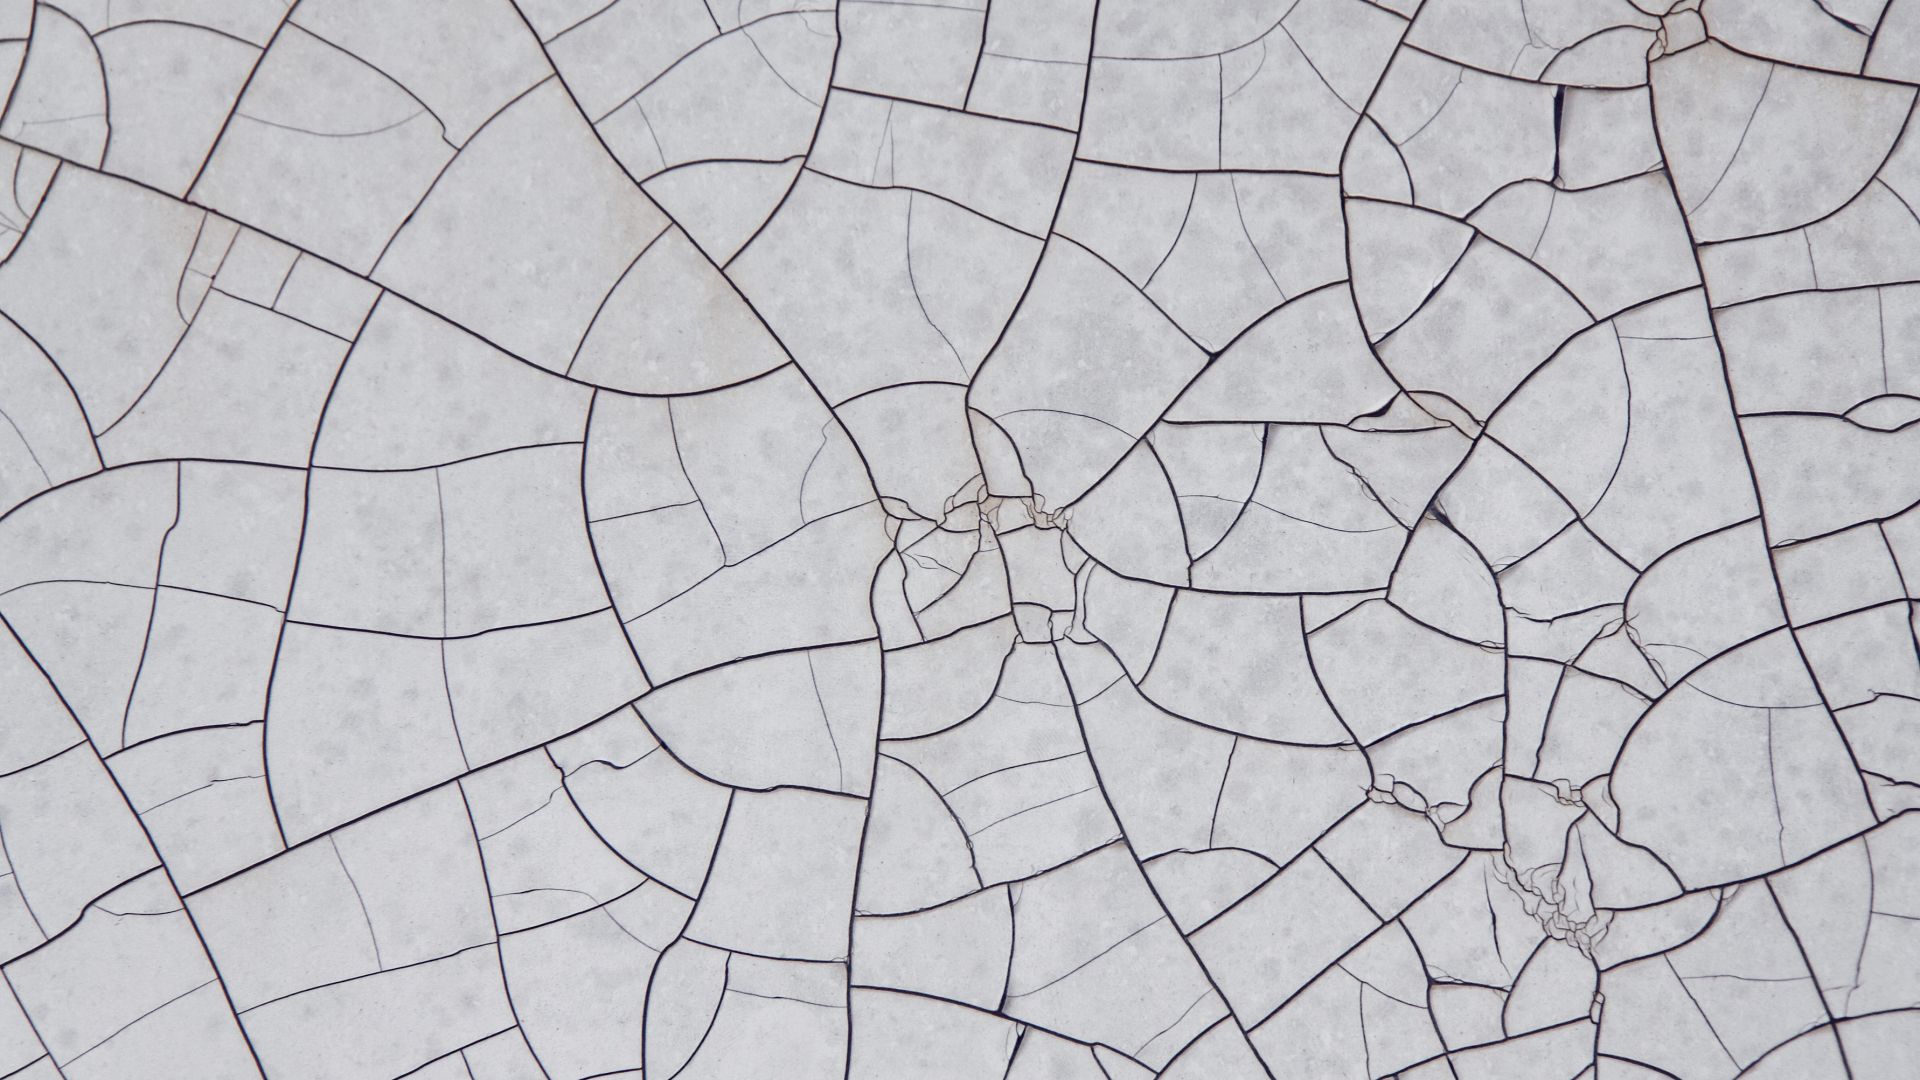 камень, андроид обои, 4k, 5k, белый, текстура, трещины, stone, android wallpaper, 4k, 5k, white, pattern, cracks (horizontal)